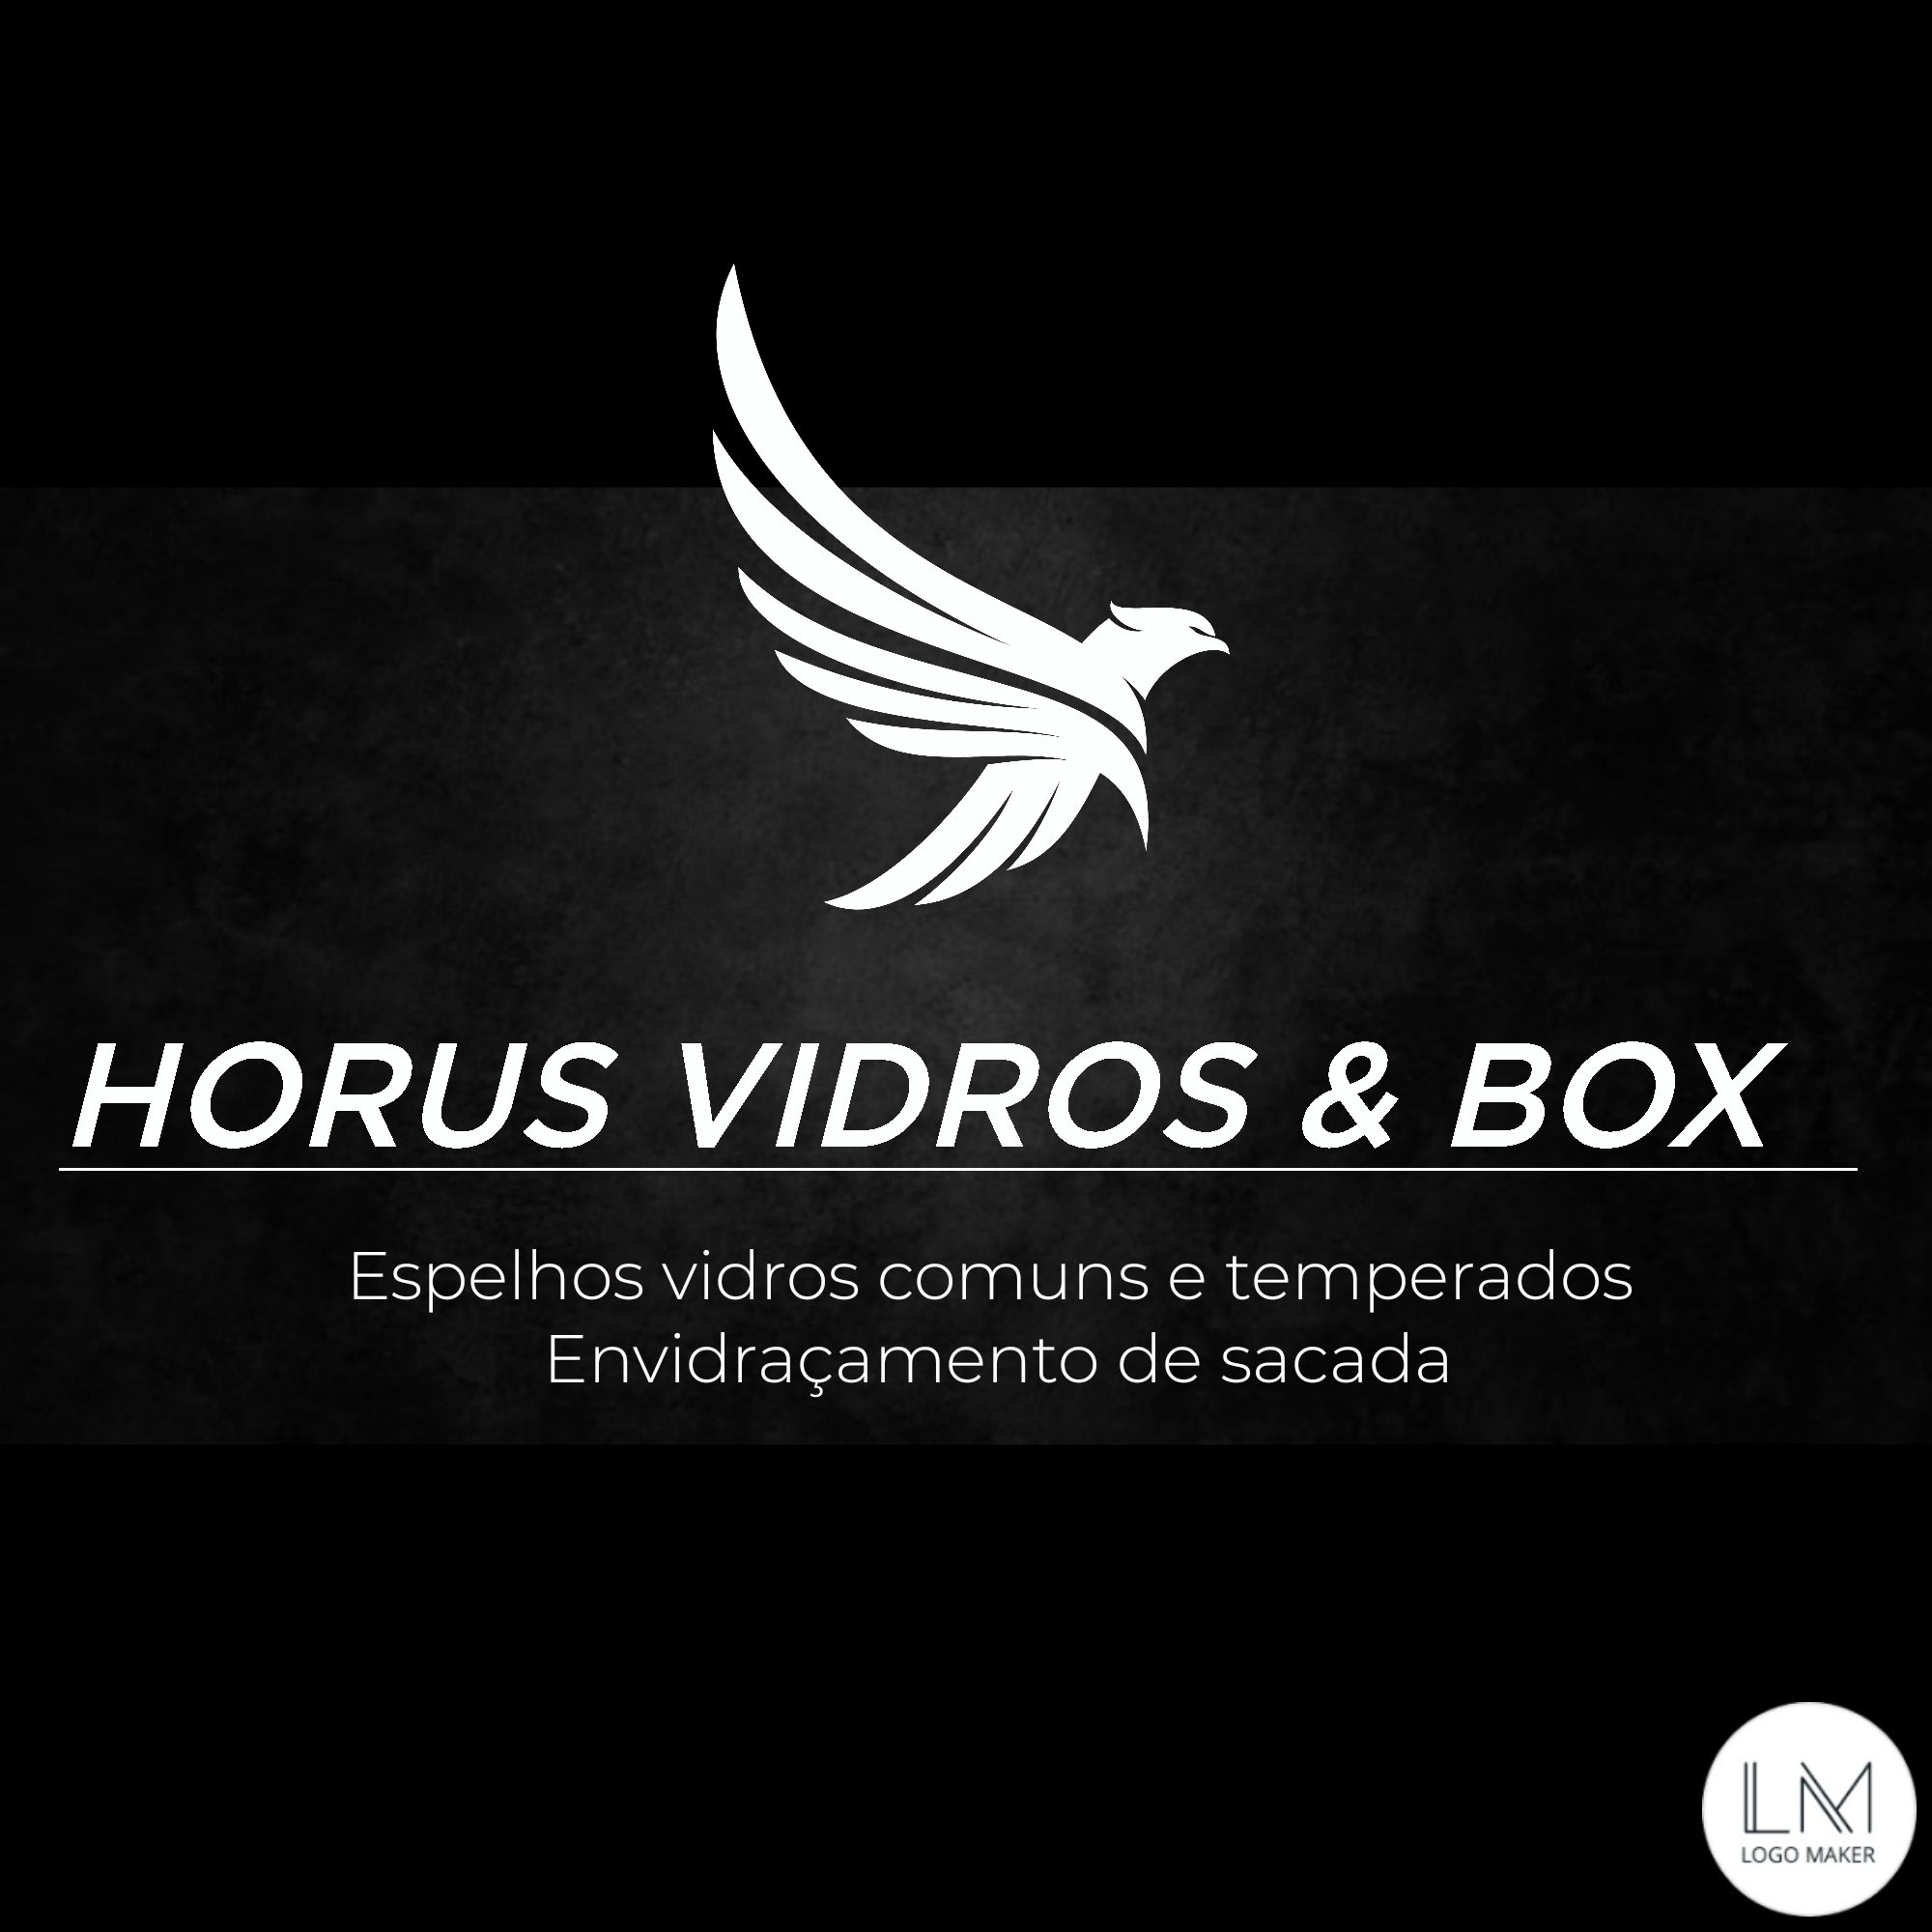 HORUS VIDROS & BOX